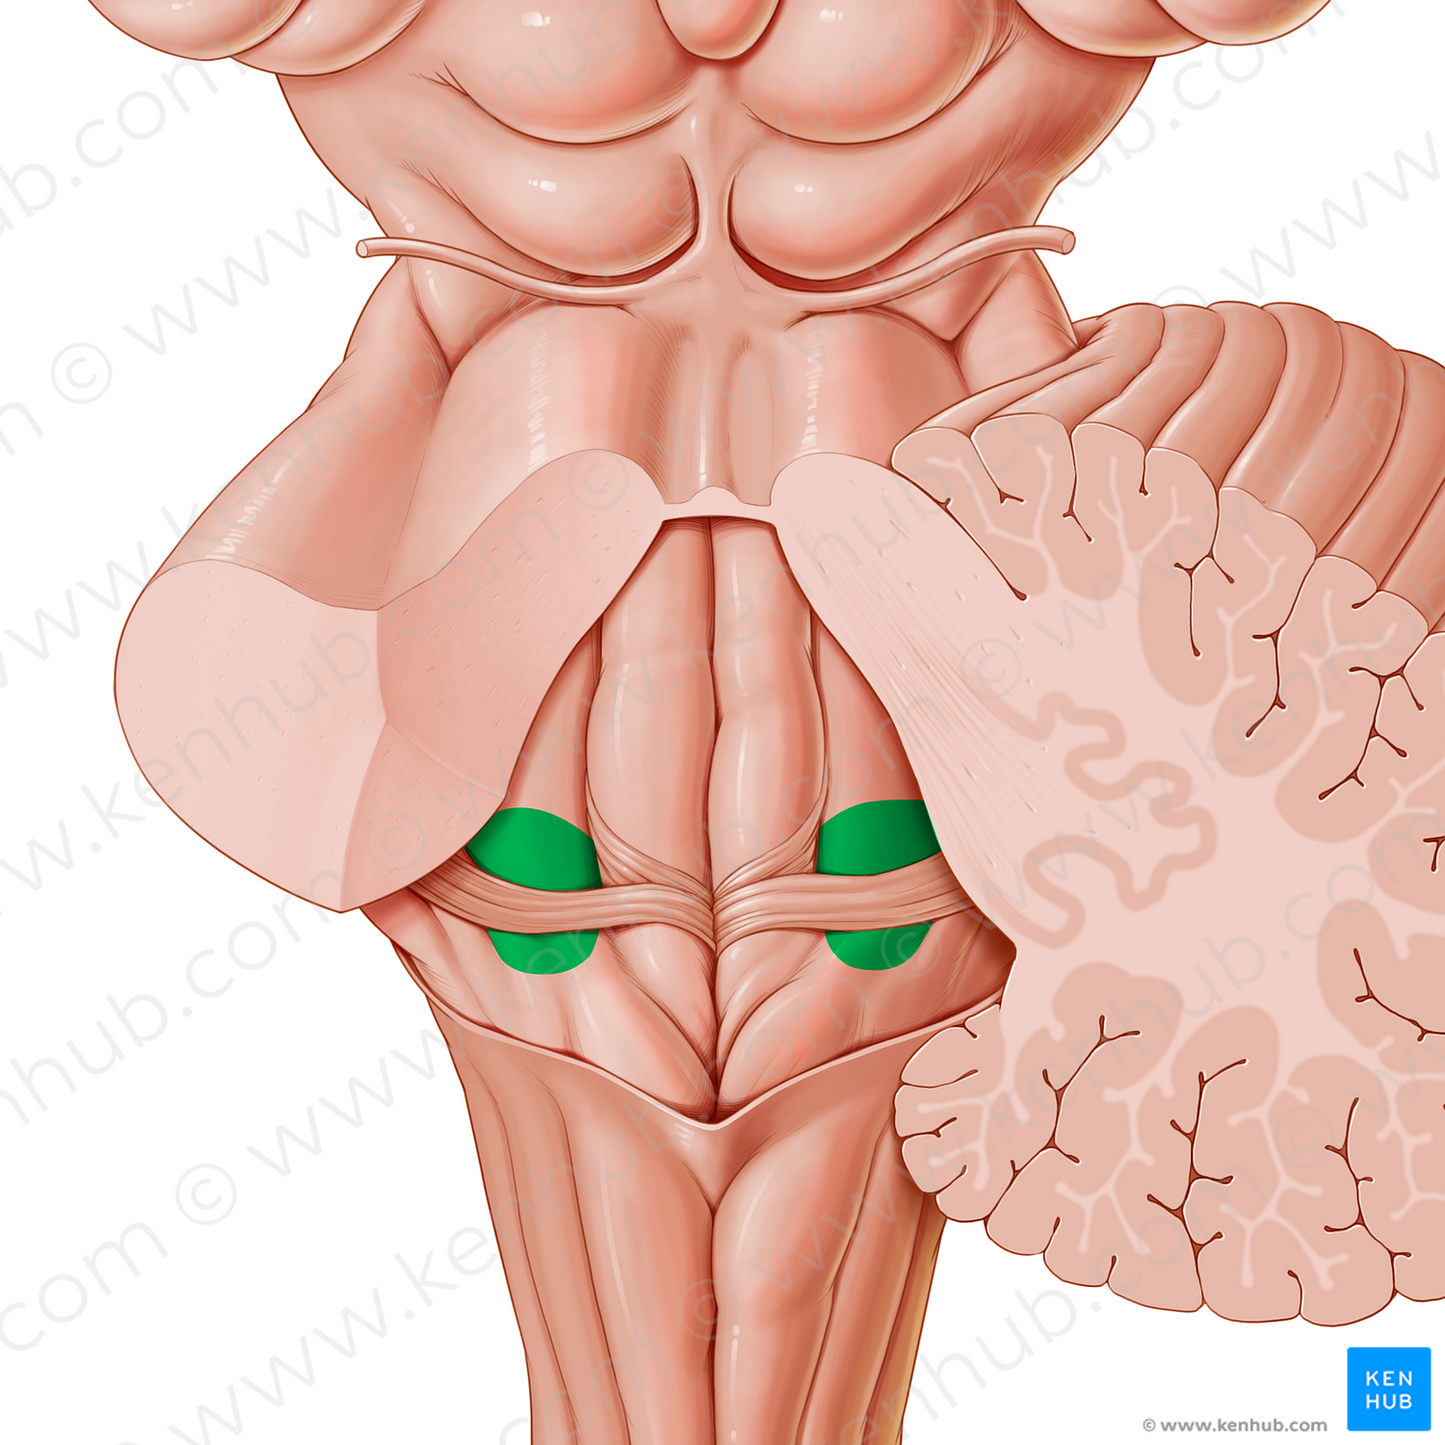 Vestibular area of fourth ventricle (#872)